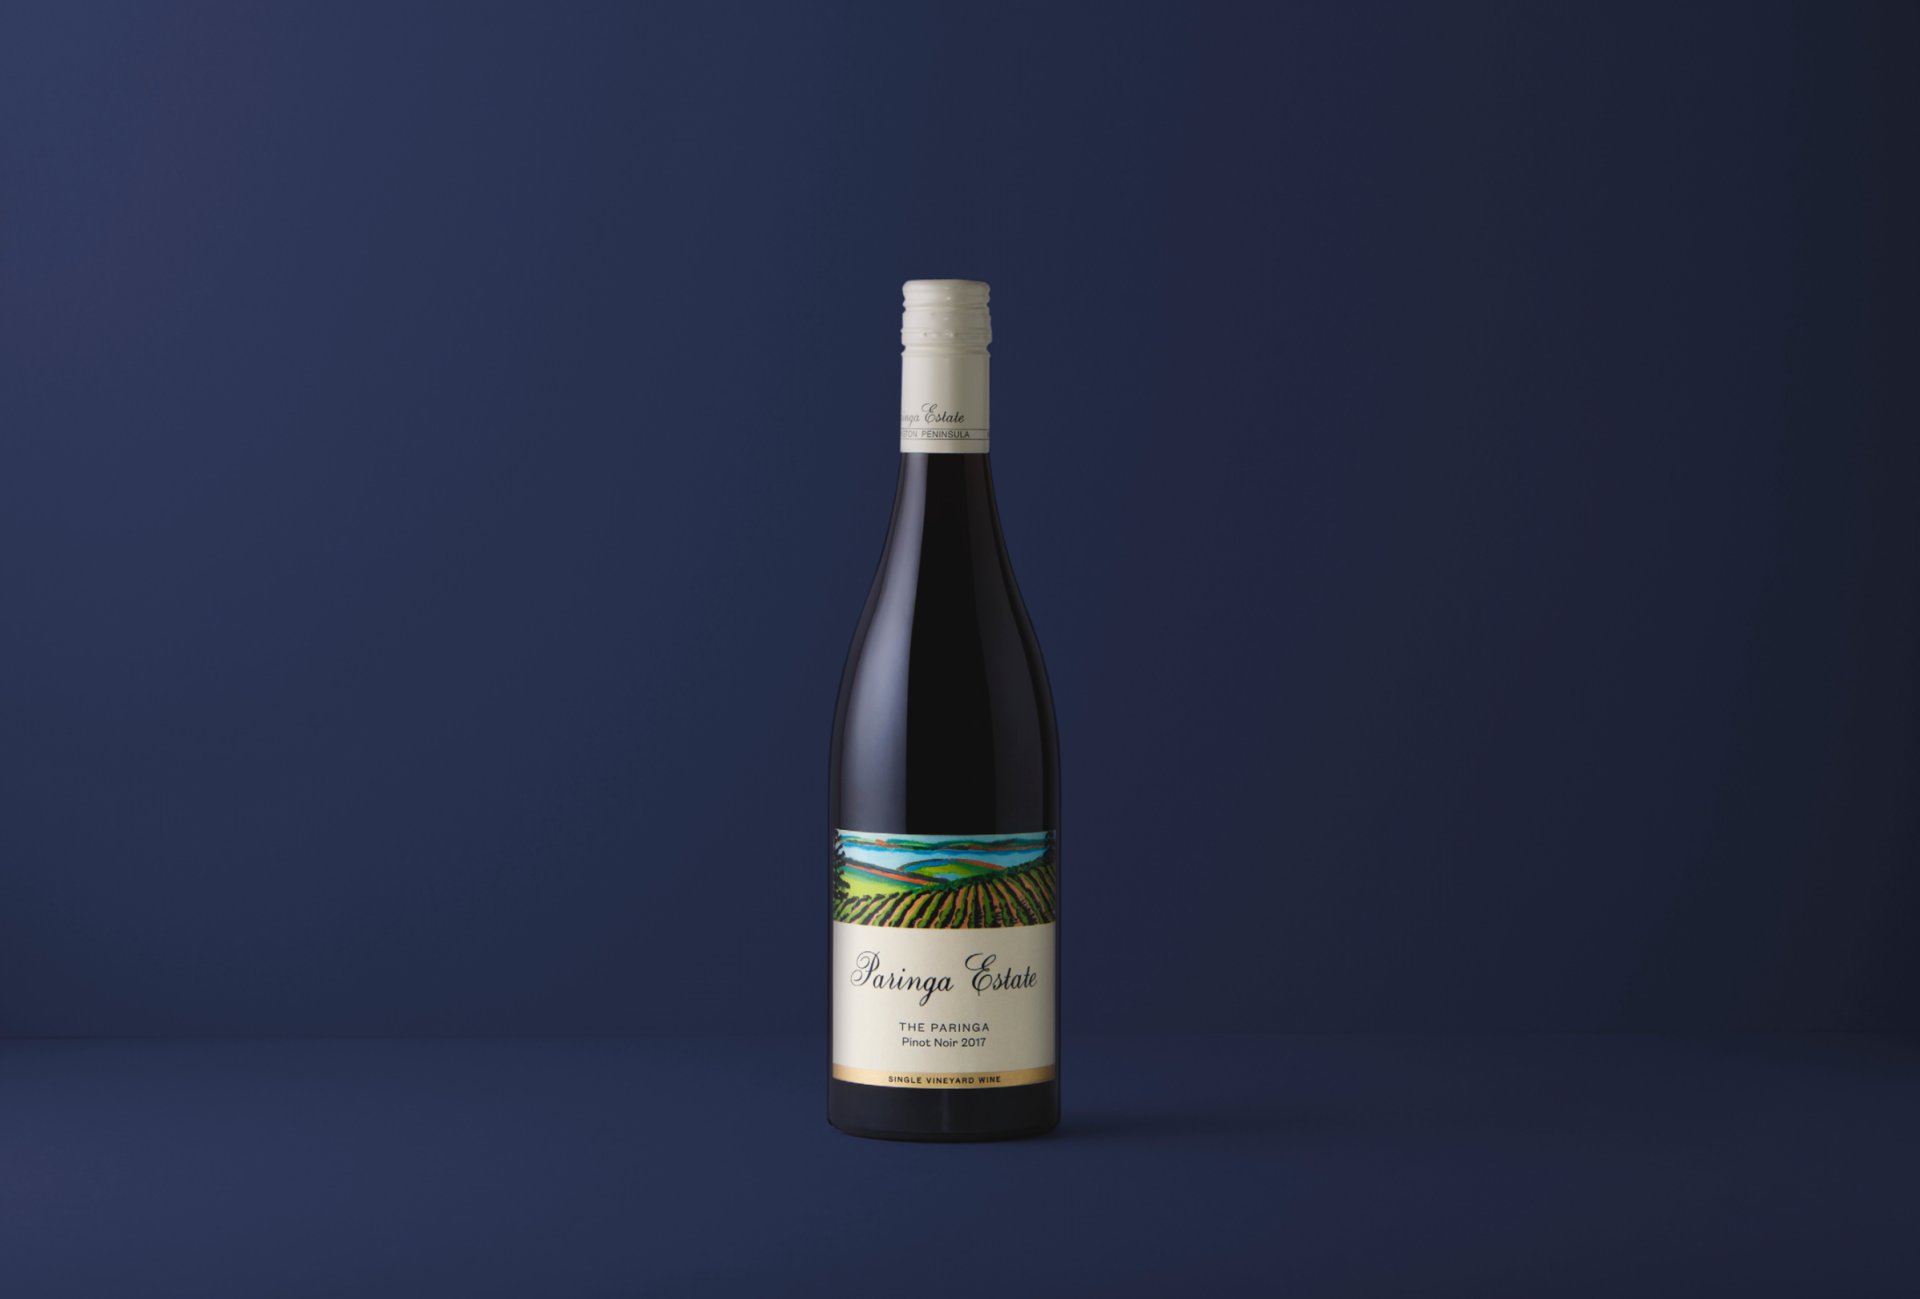 New wine label design for iconic Mornington Peninsula wine brand Paringa Estate.